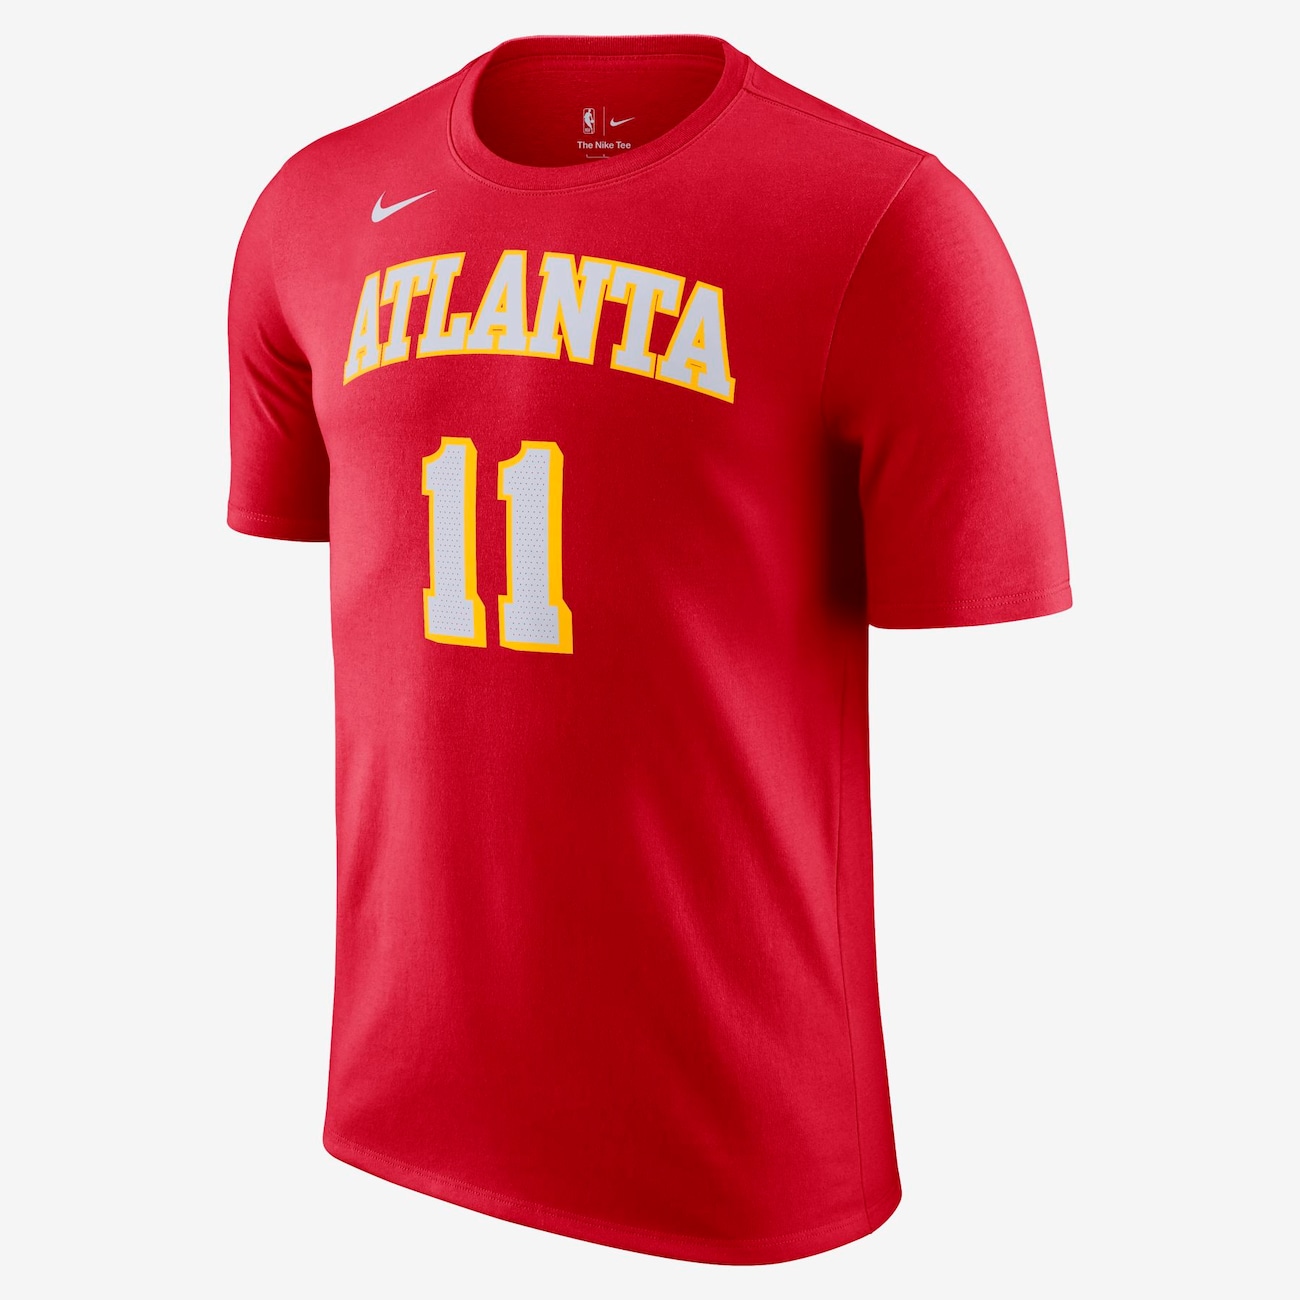 Camiseta Nike Atlanta Hawks Next Nature Masculina